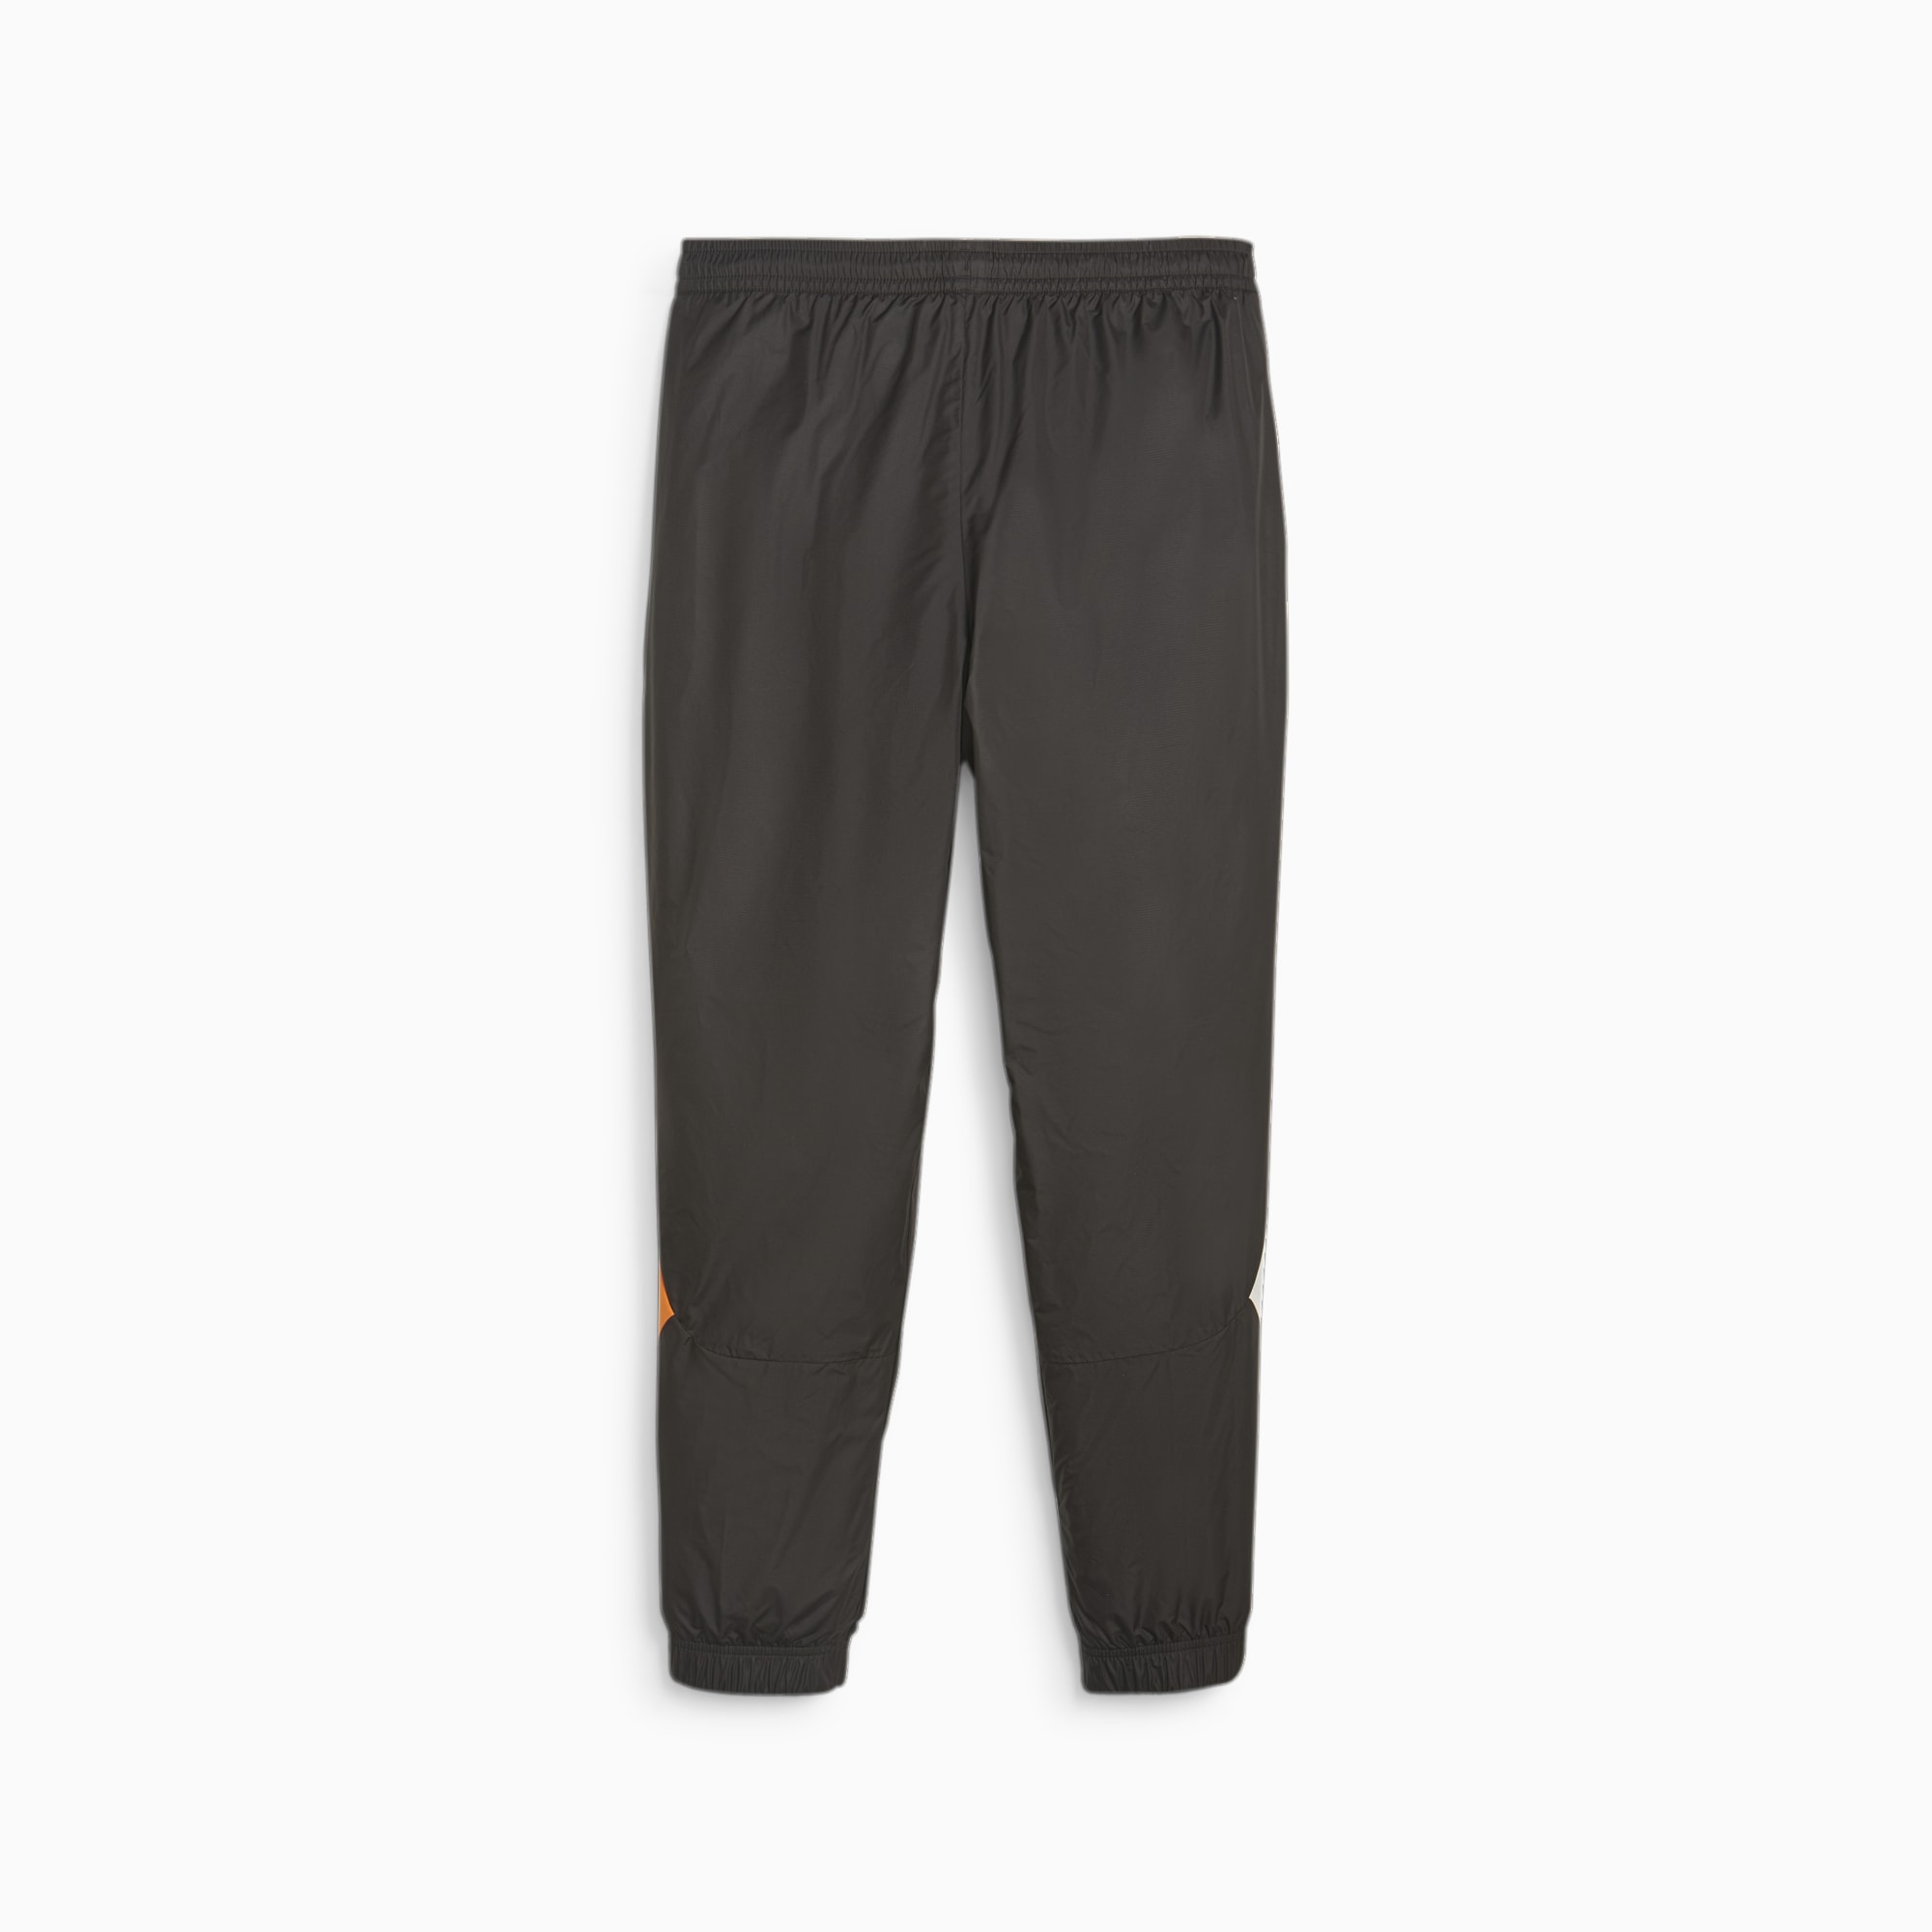 Men's PUMA Olympique De Marseille Prematch Football Pants, Black/Flat Dark Grey, Size L, Clothing